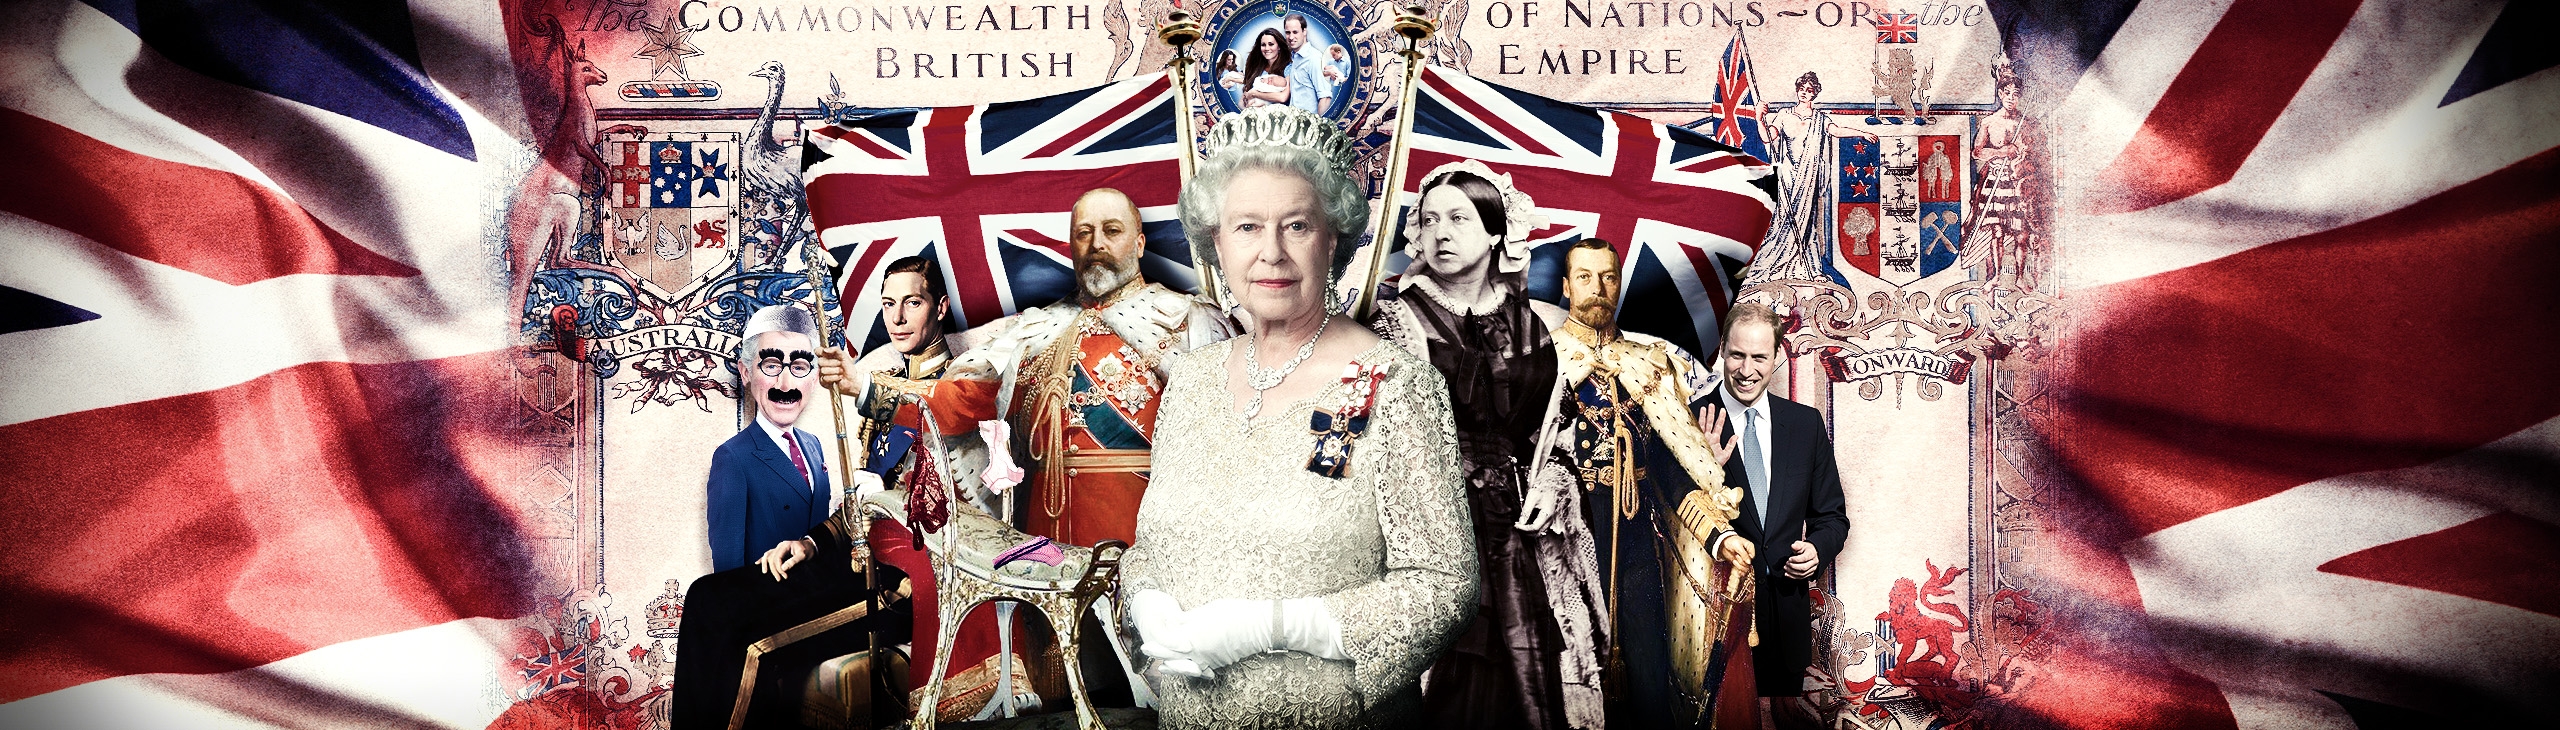 A moderna monarquia britânica